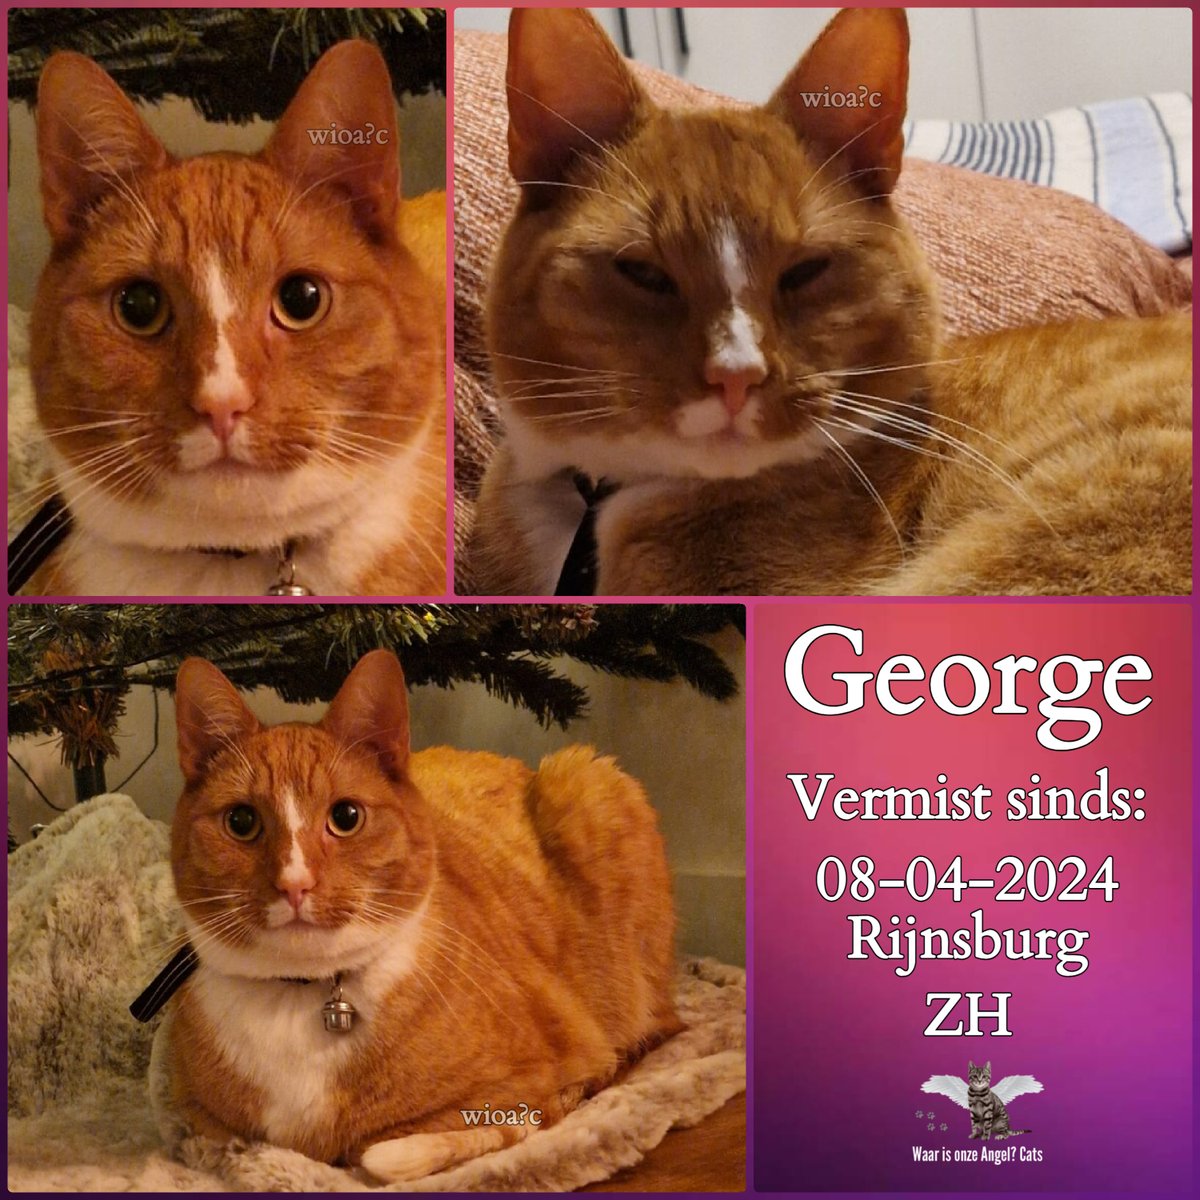 George #Vermist sinds 08-04-2024 te #Rijnsburg #ZuidHolland #Nederland 

facebook.com/photo/?fbid=72…